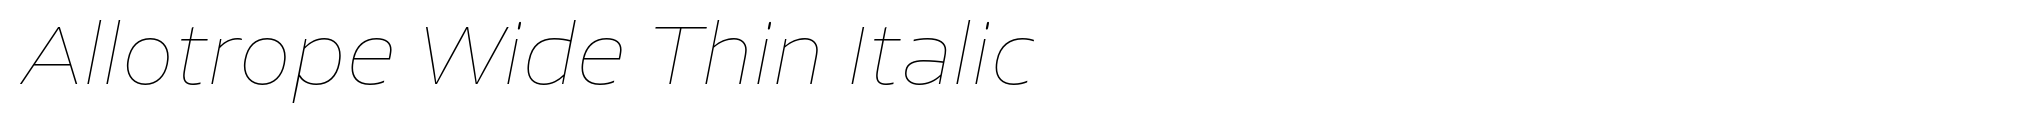 Allotrope Wide Thin Italic image